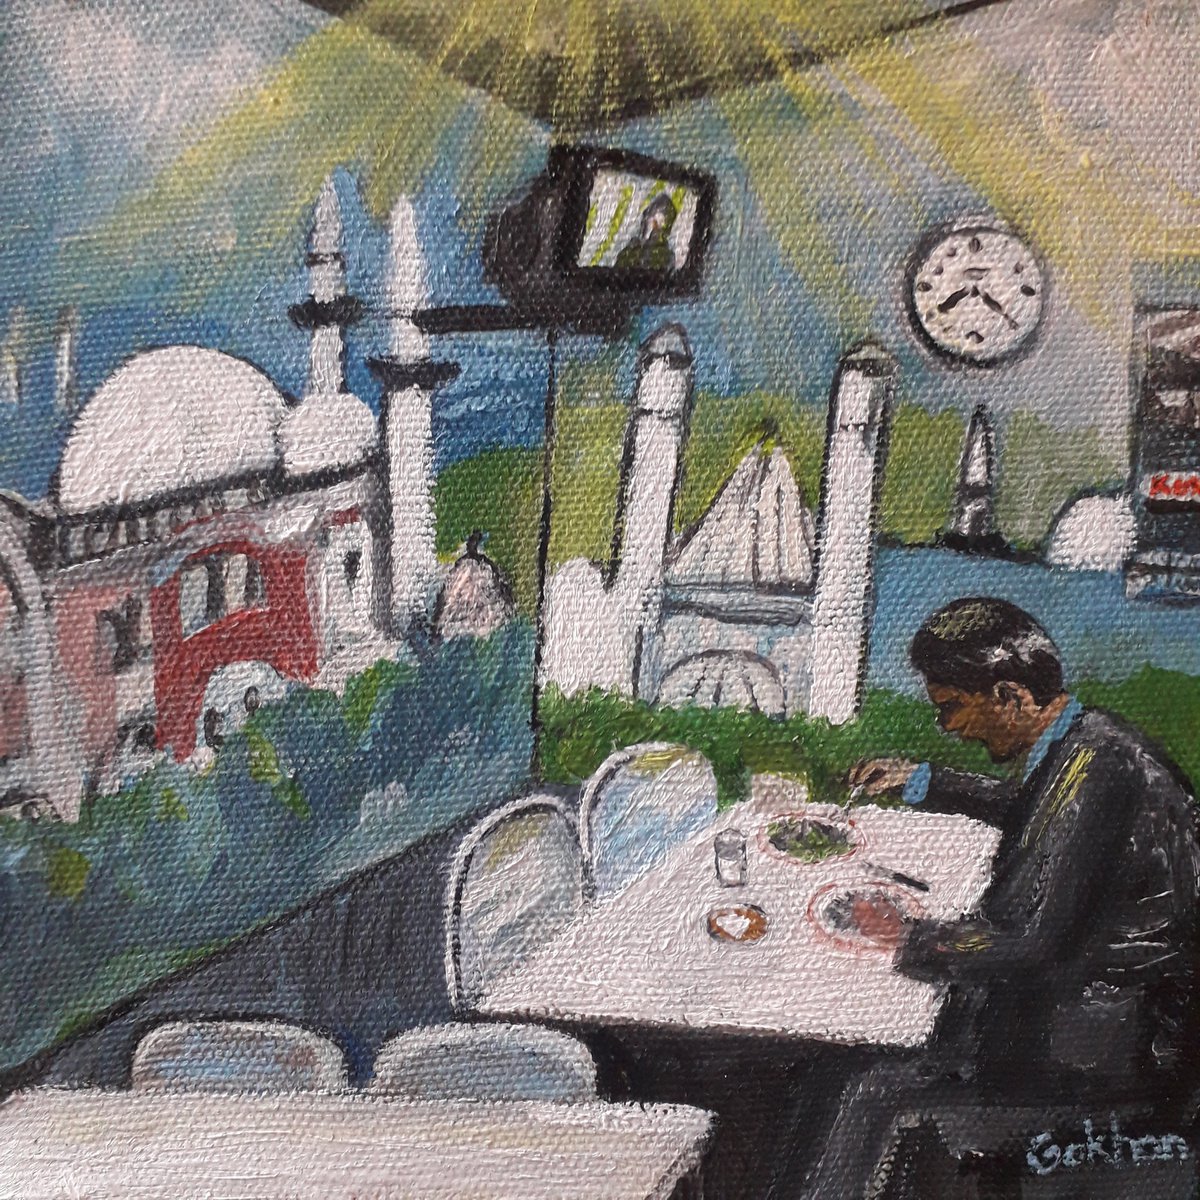 Alone in an Istanbul tavern by G�khan Alpgiray